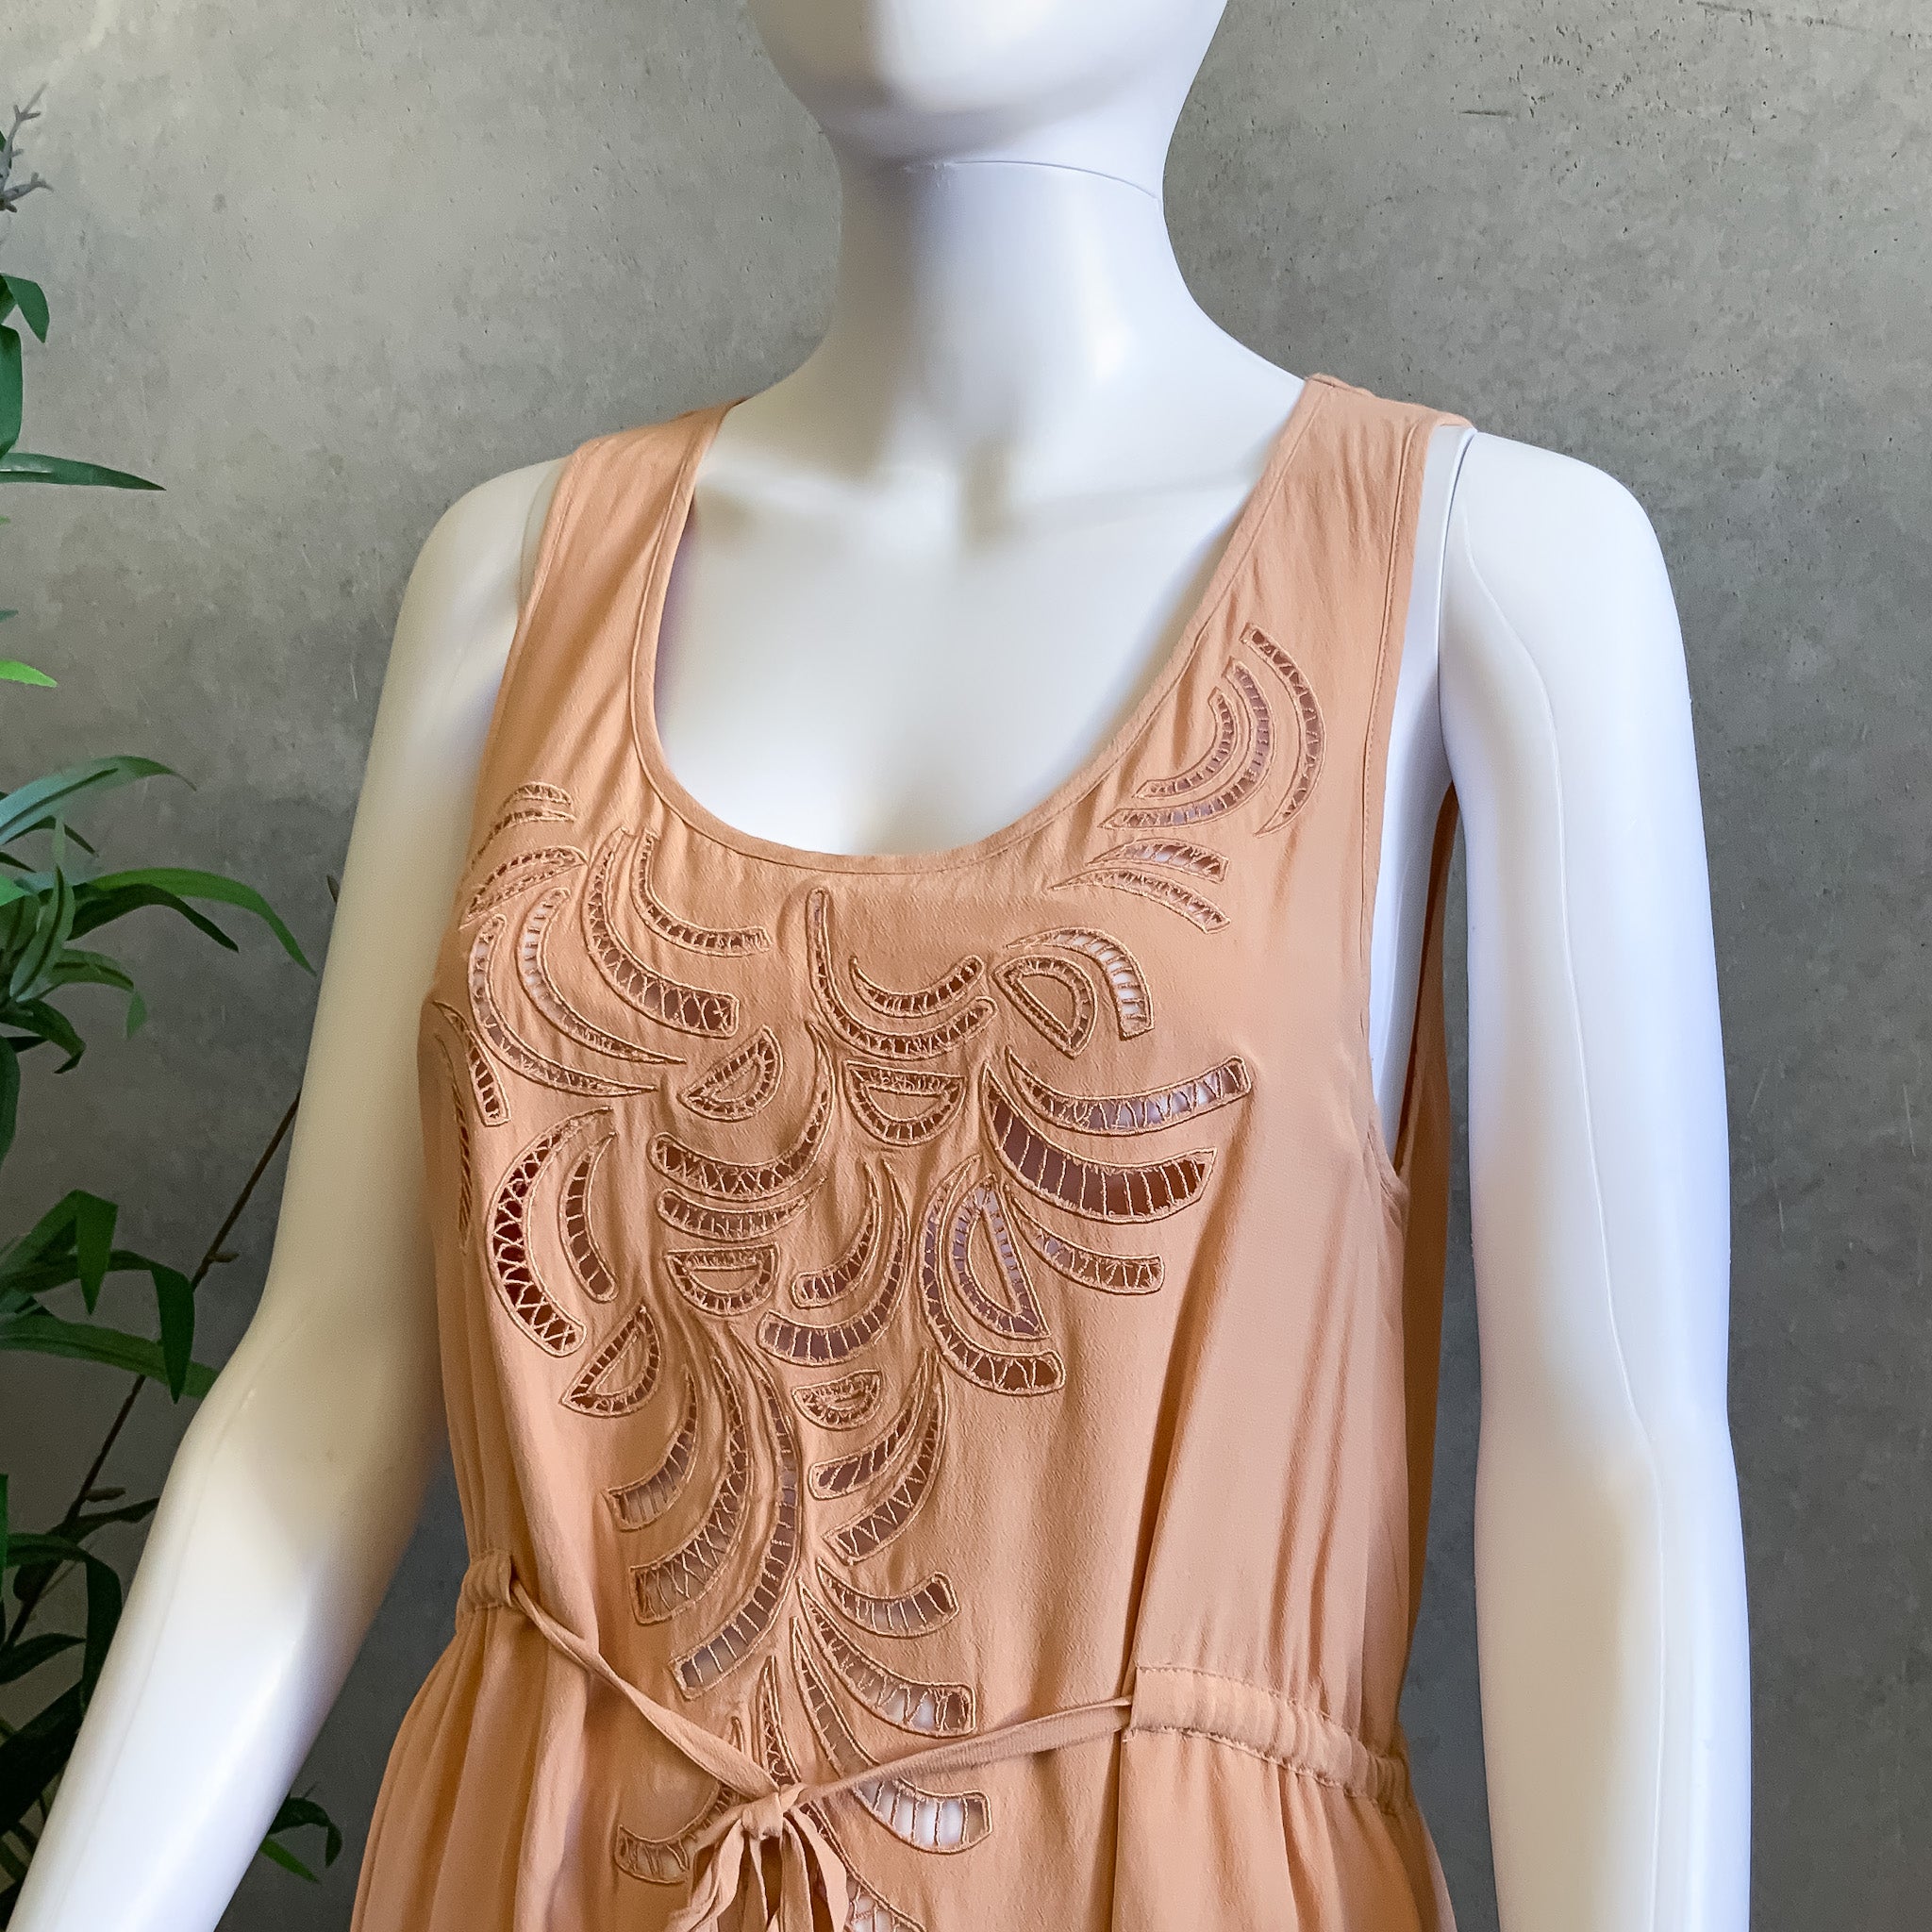 WISH Womens Peach Laser Cut Out Tie Waist Dress - Size S